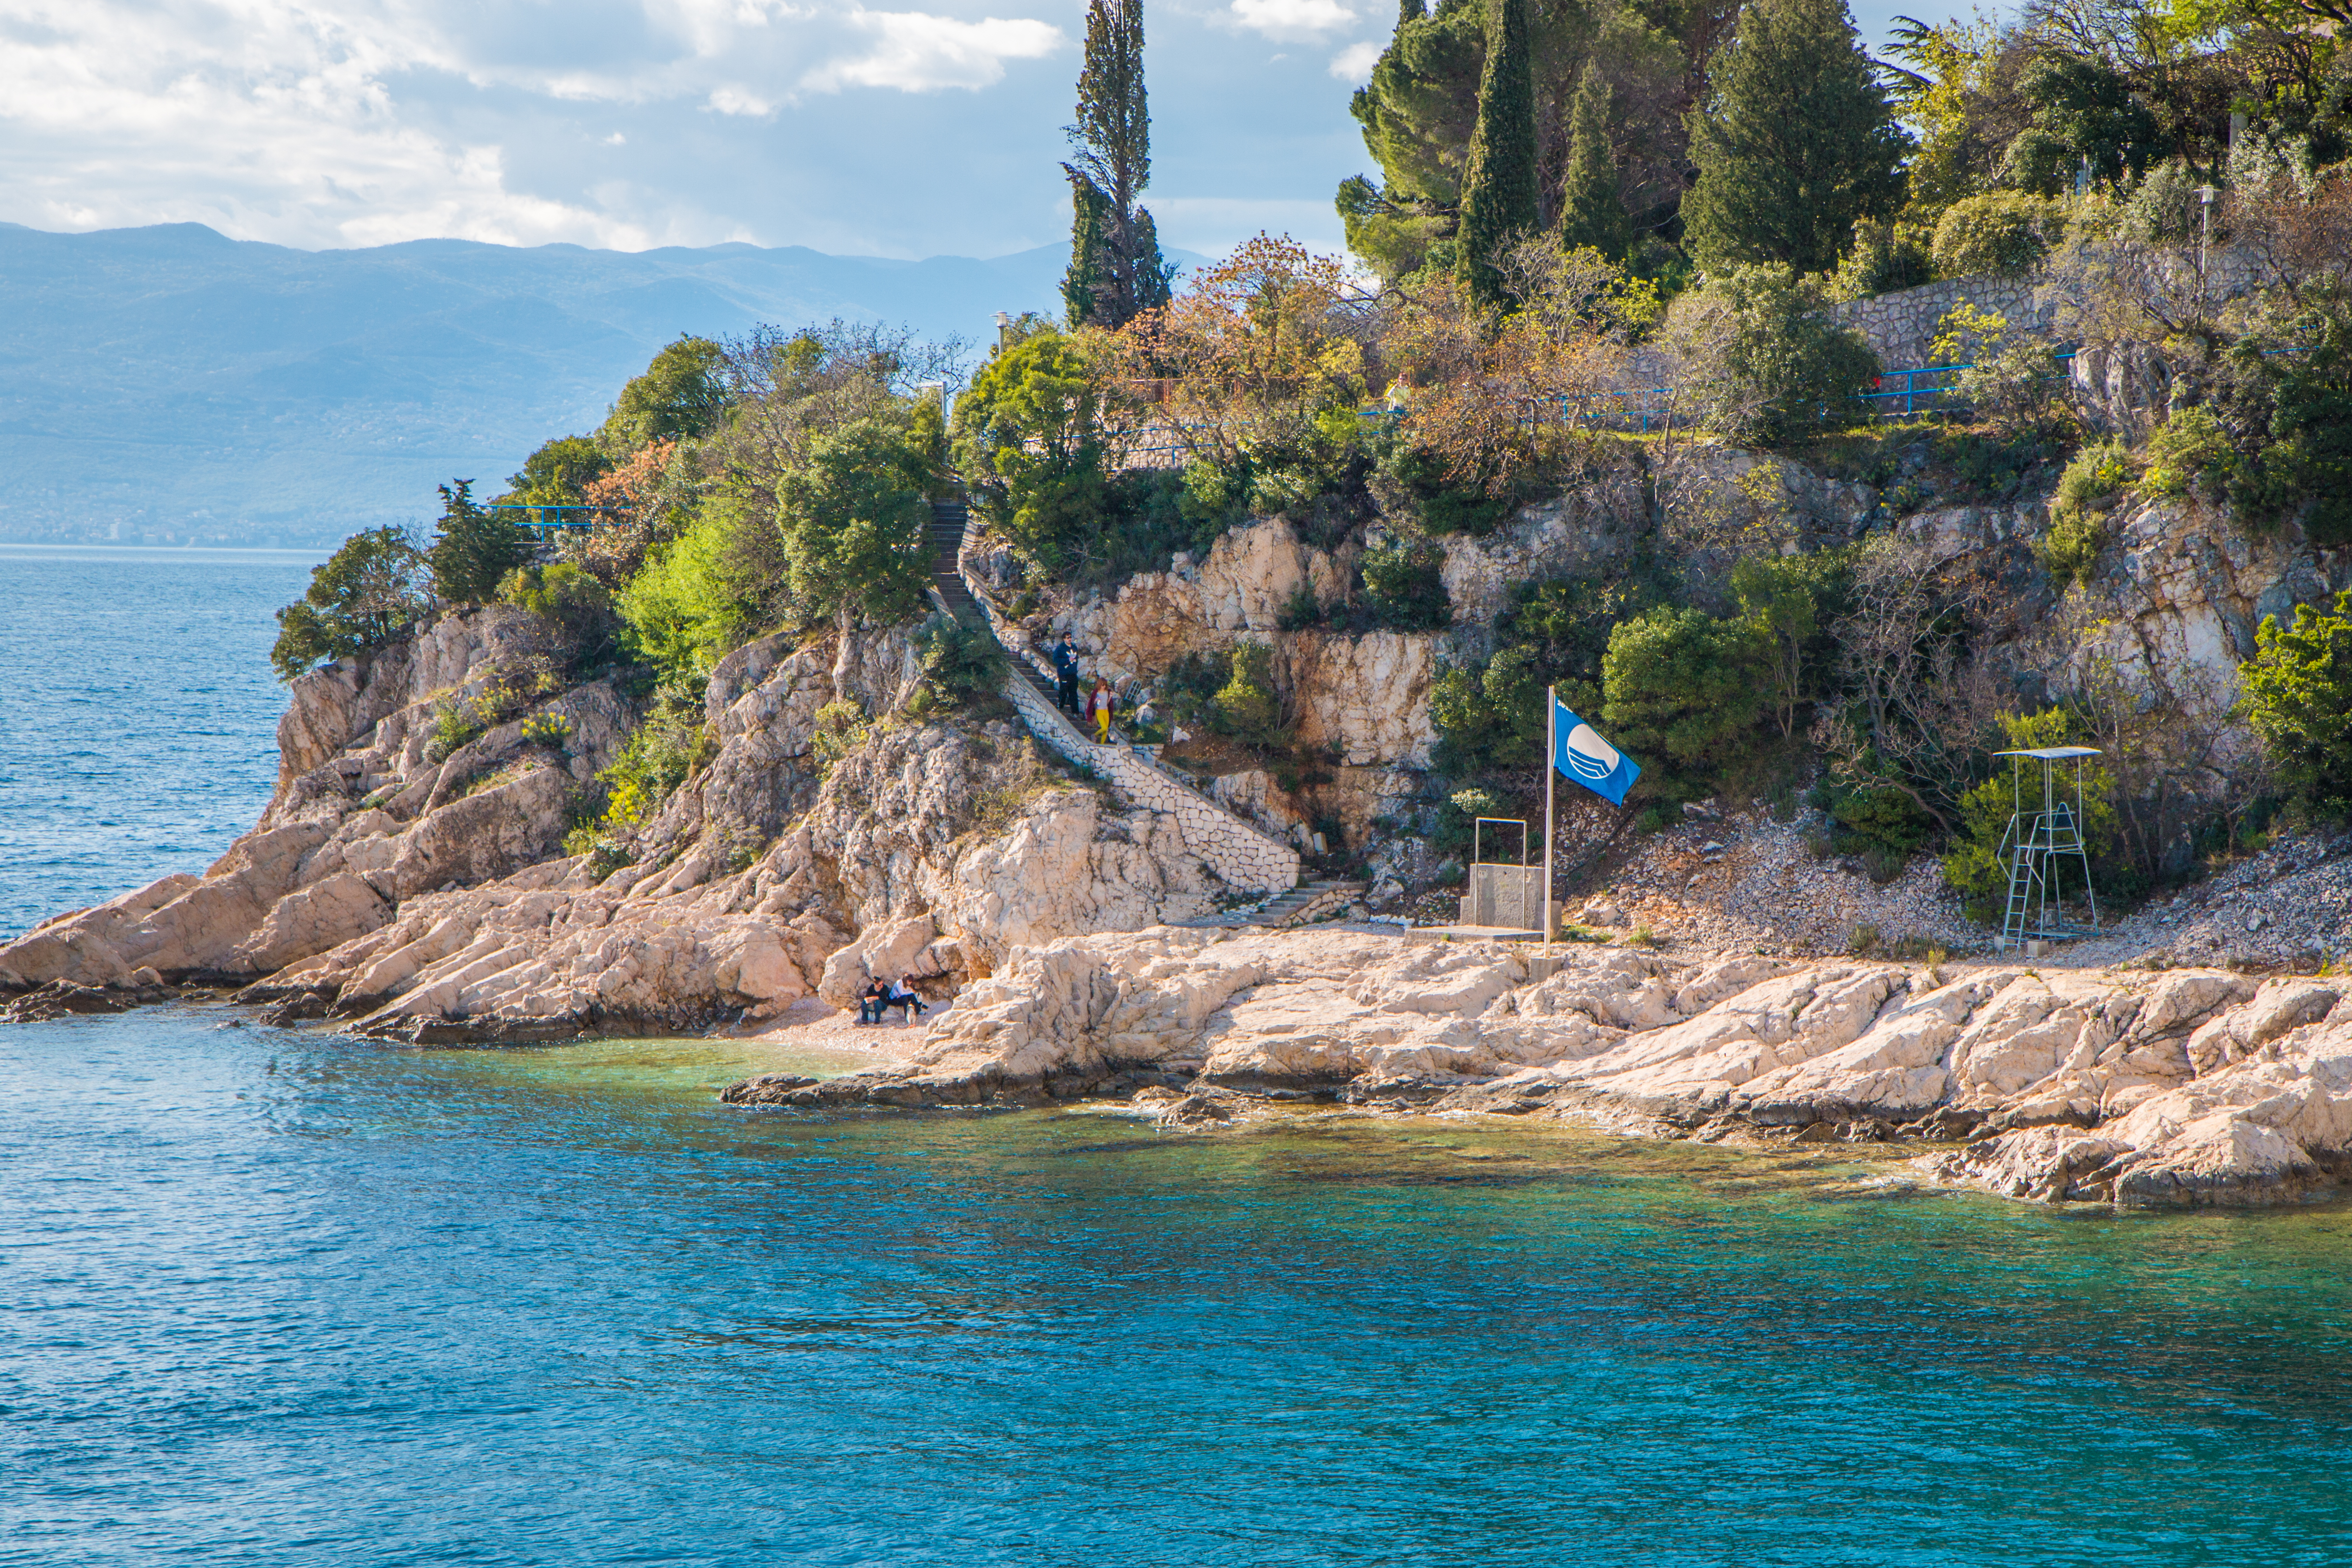 Blue flag raising – Svežanj Bay